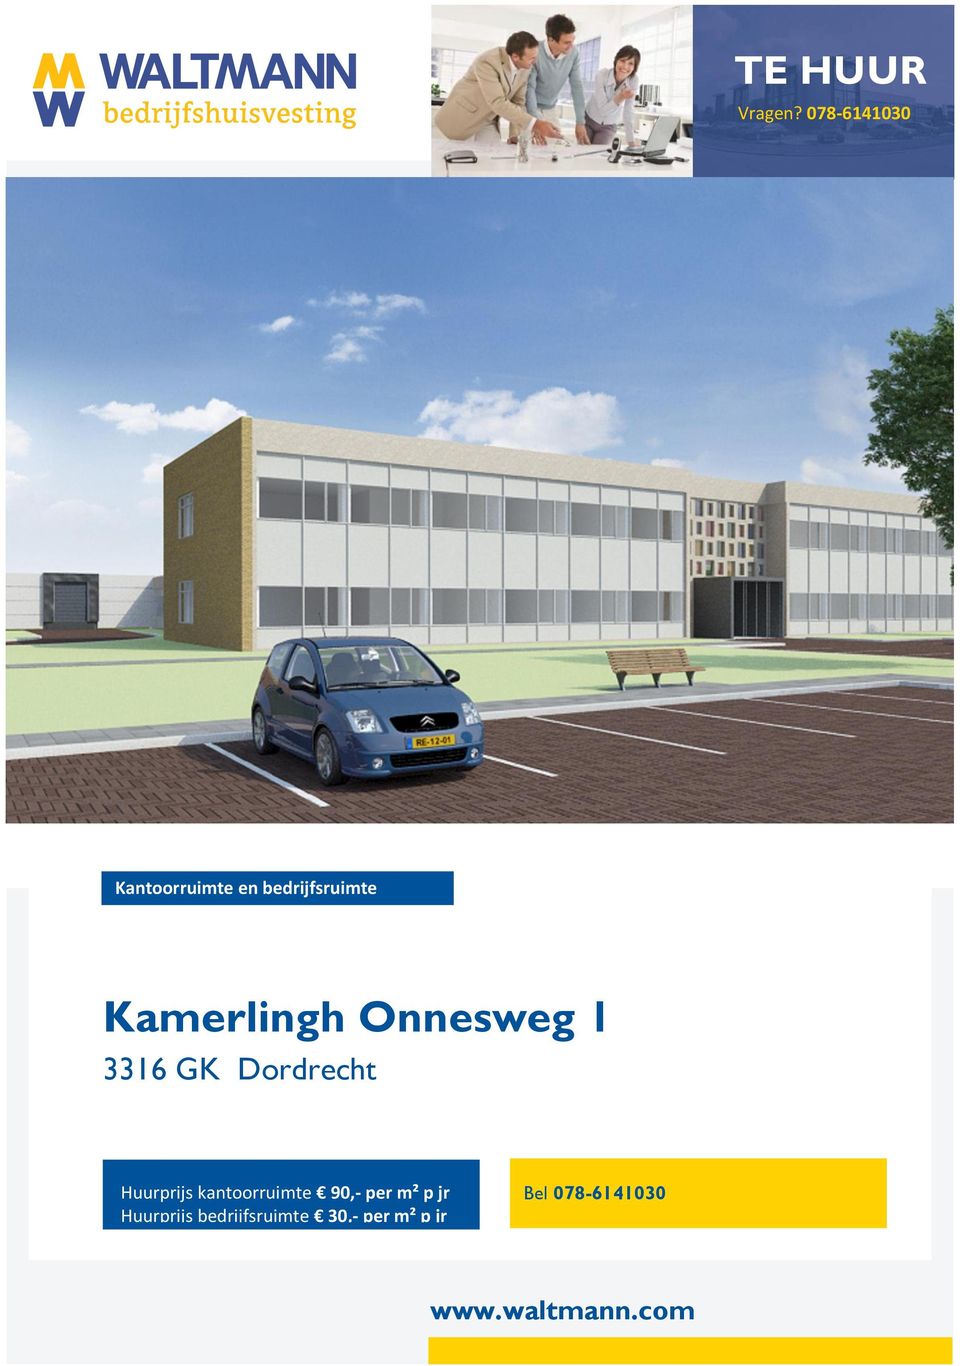 Kamerlingh Onnesweg 1 3316 GK Dordrecht Huurprijs